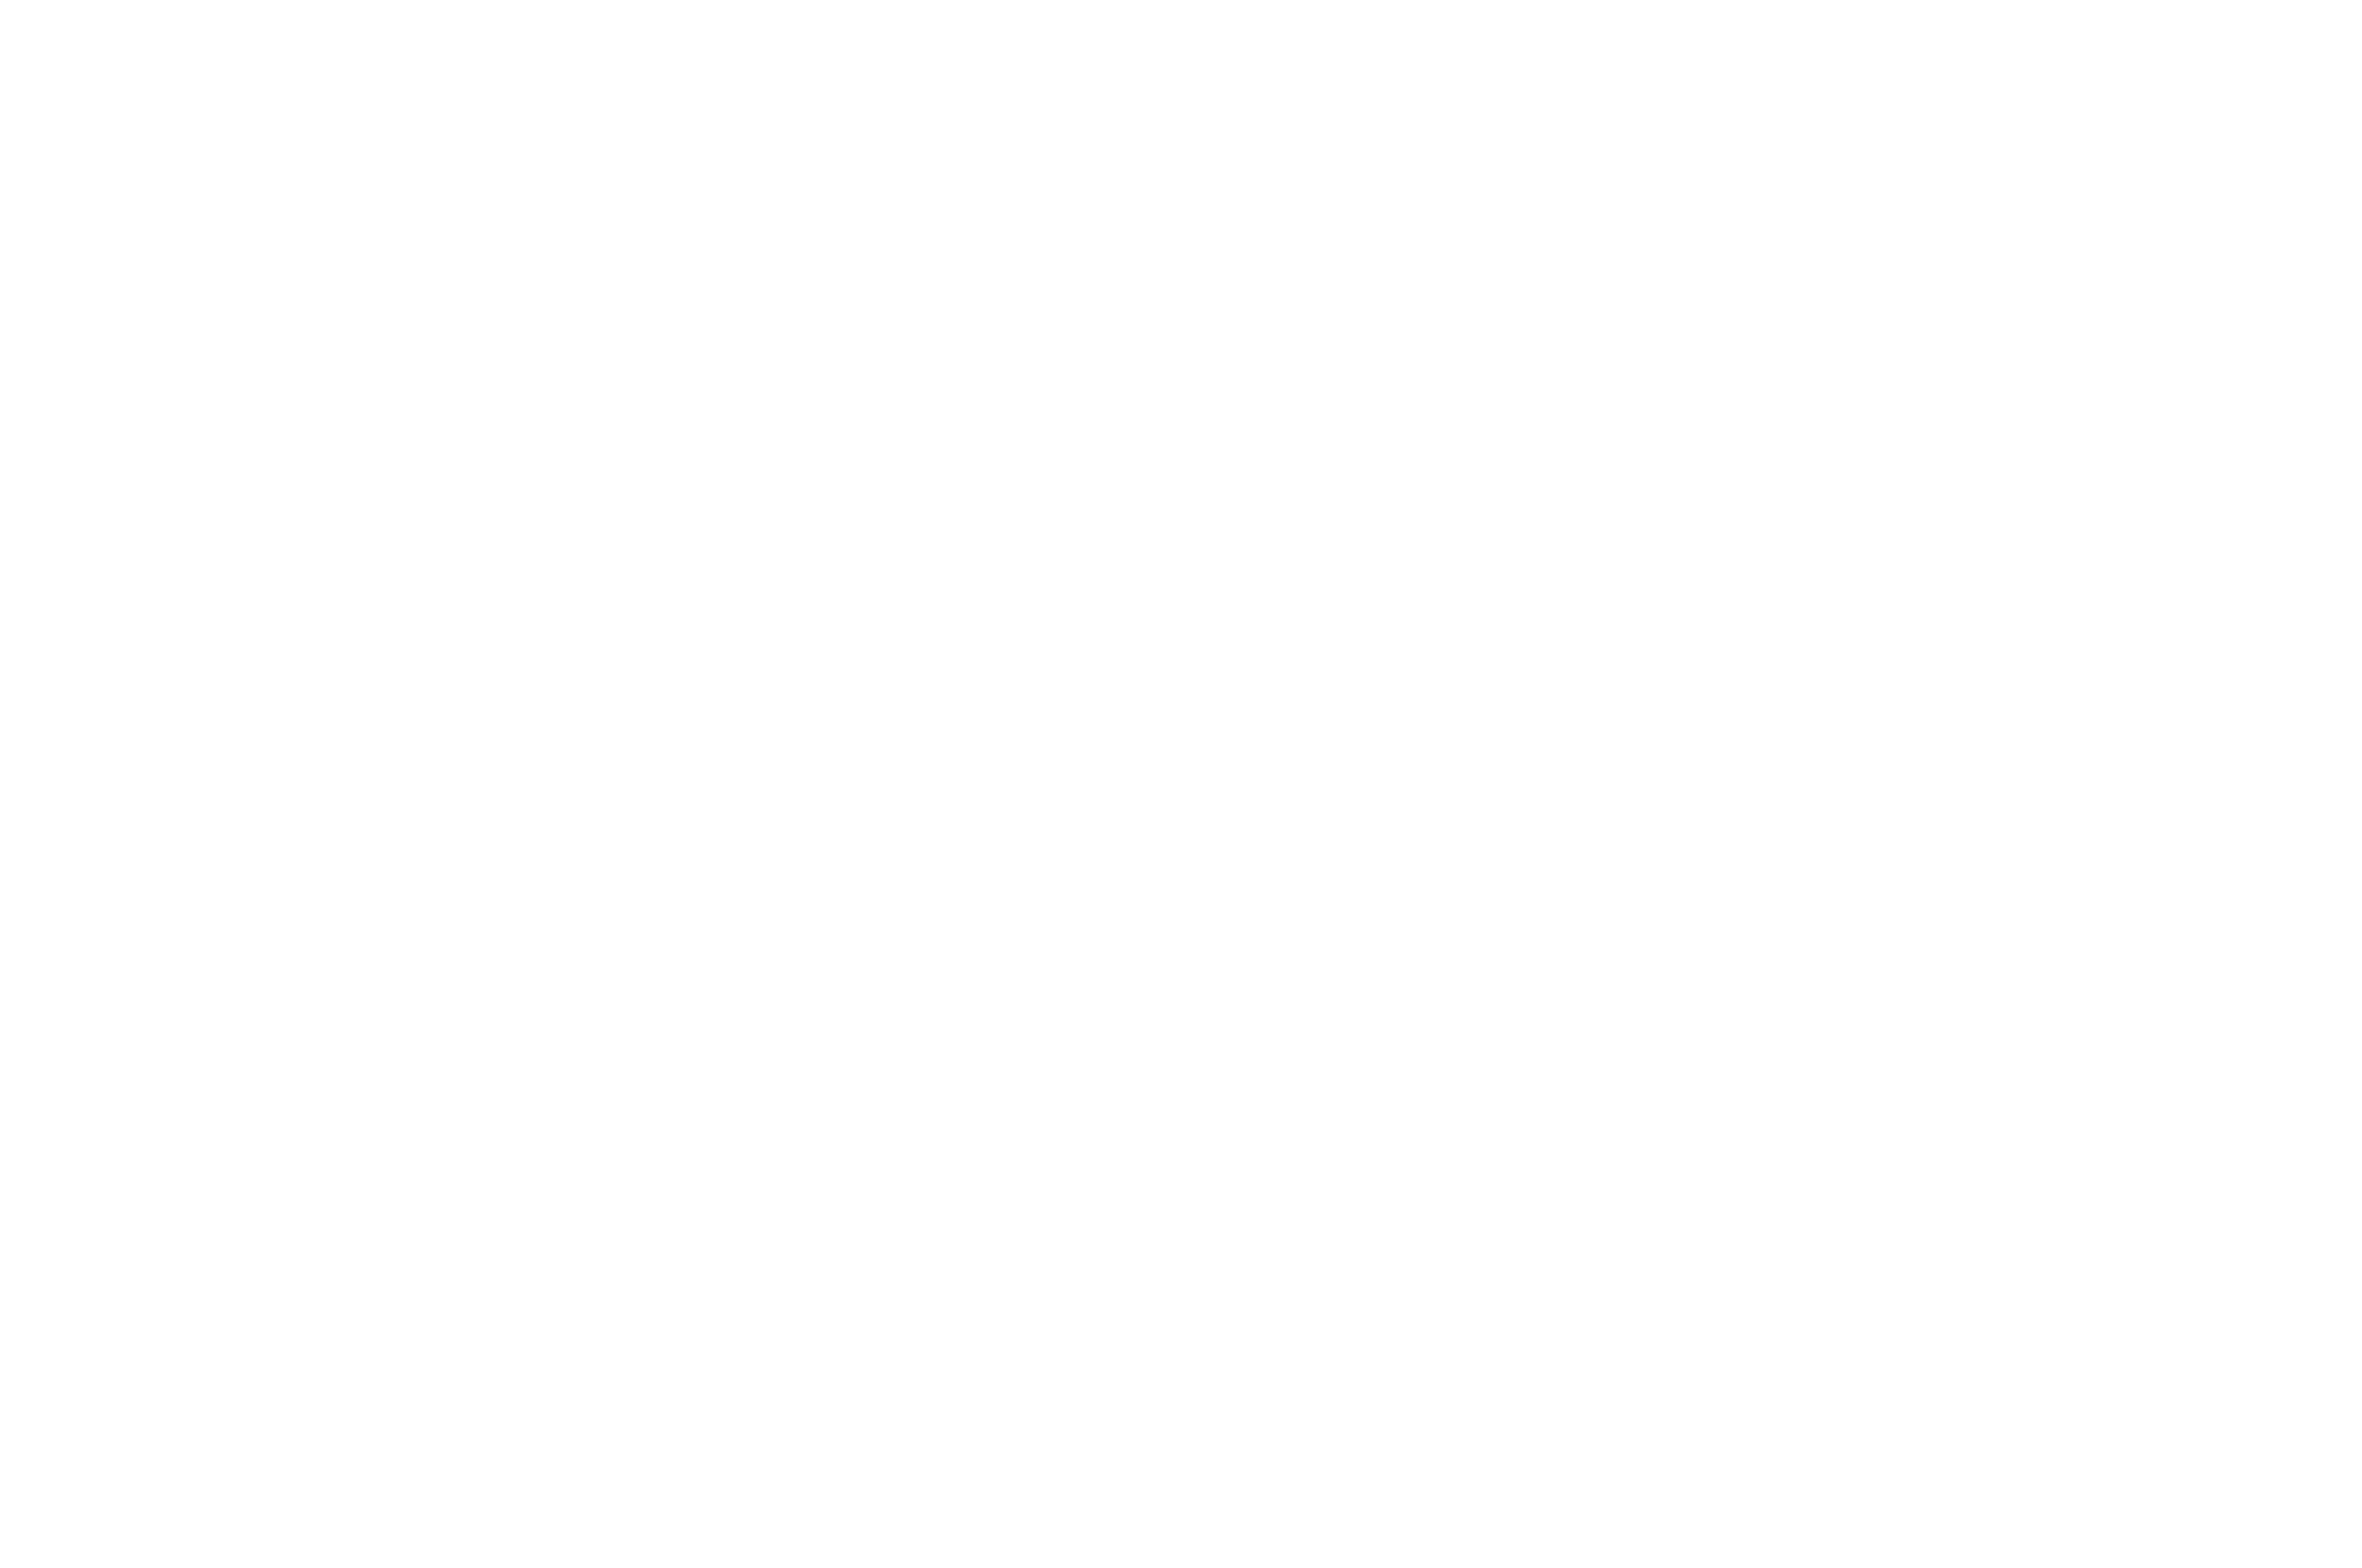 Beyond Hollywood International Film Festival Loved The Movie Finalist